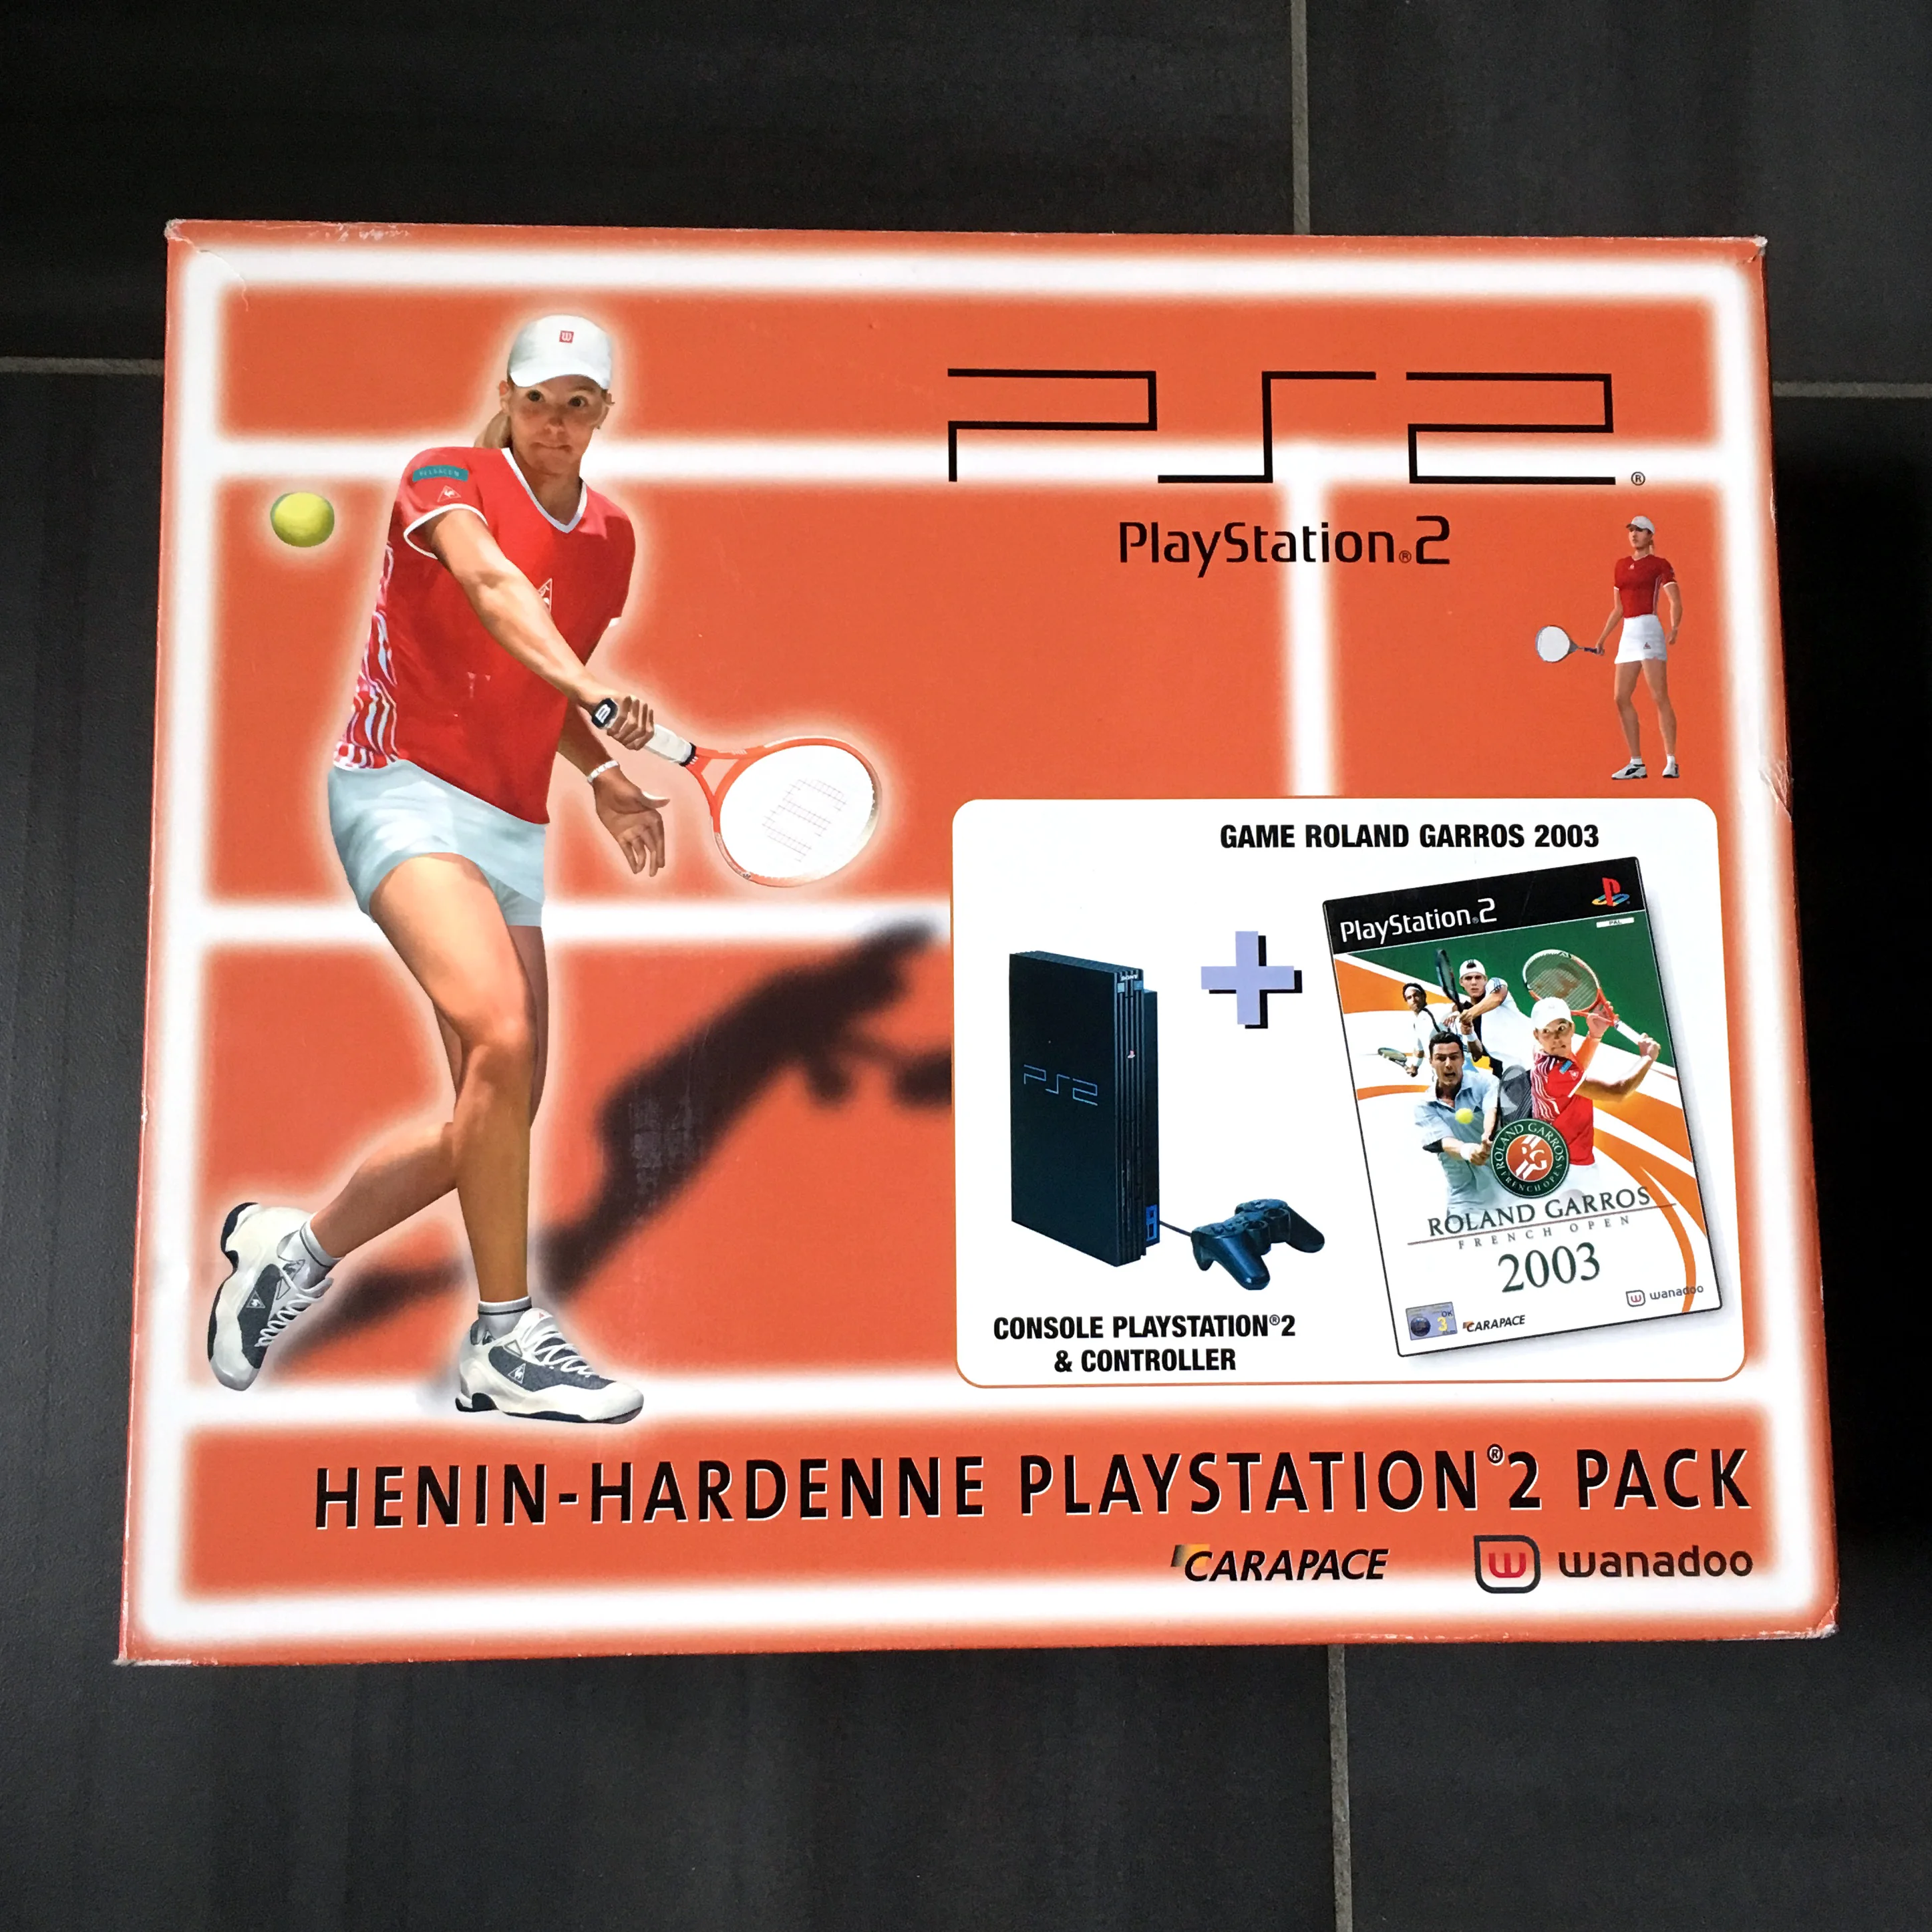  Sony  PlayStation 2 Henin-Hardenne Pack